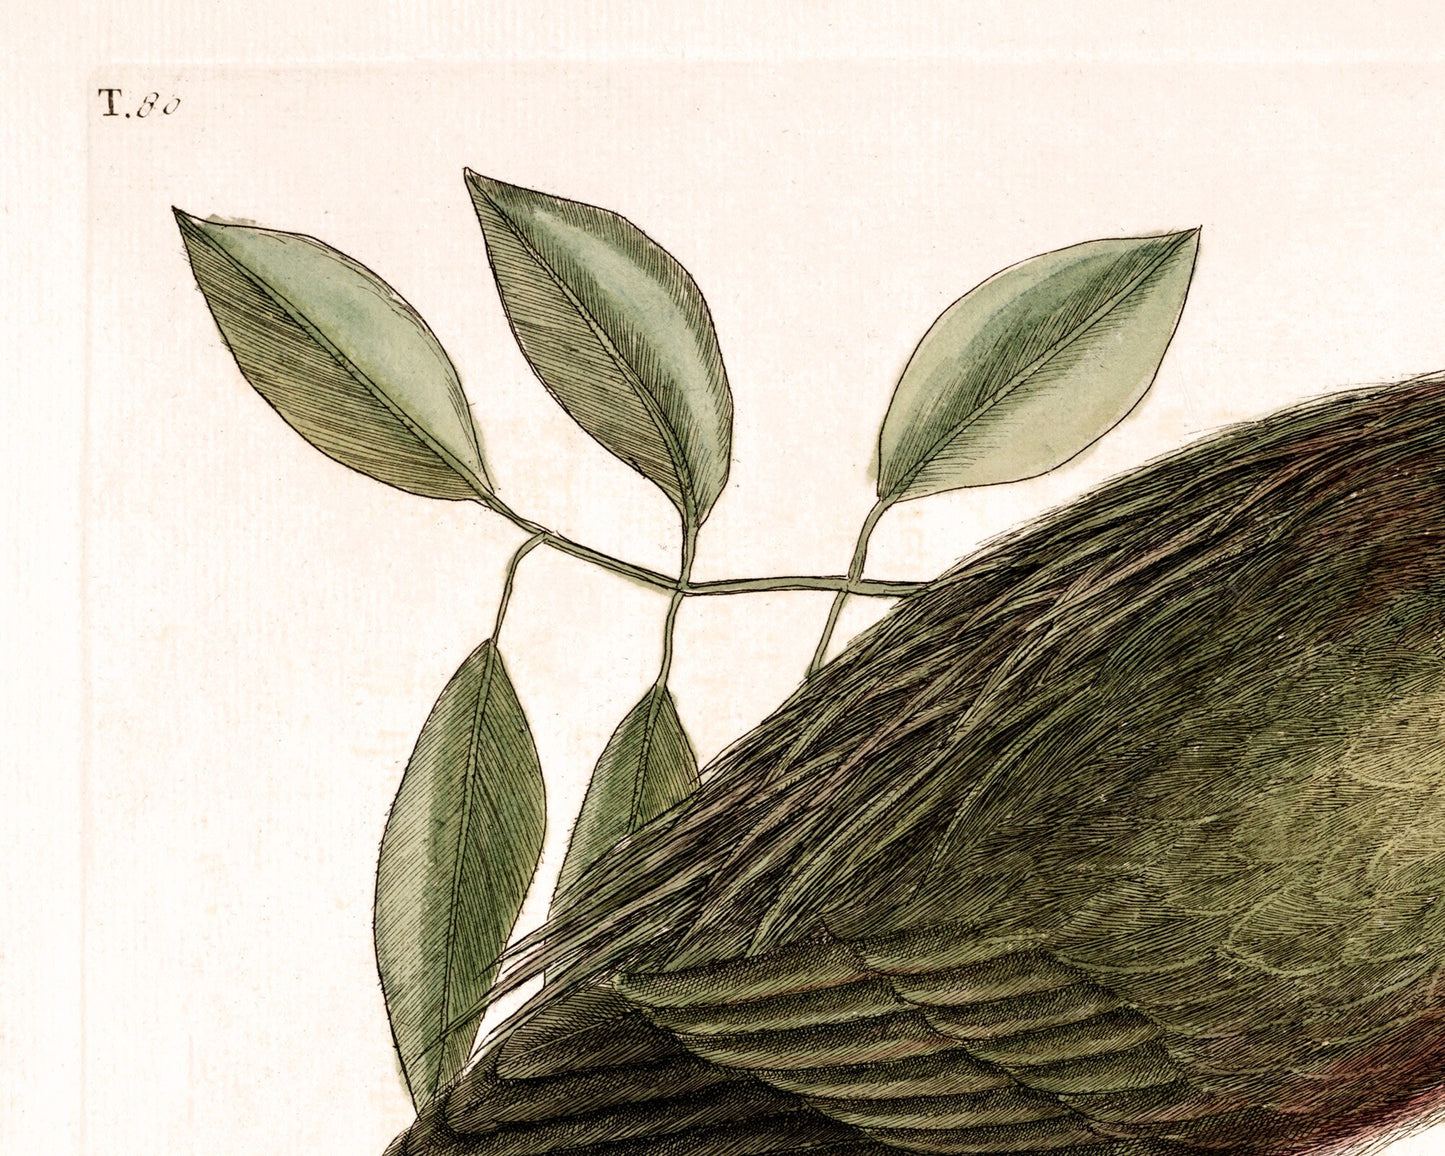 Antique bird art | Eurasian bittern | 18th century Mark Catesby | Natural history illustration | Modern vintage décor | Eco-friendly gift